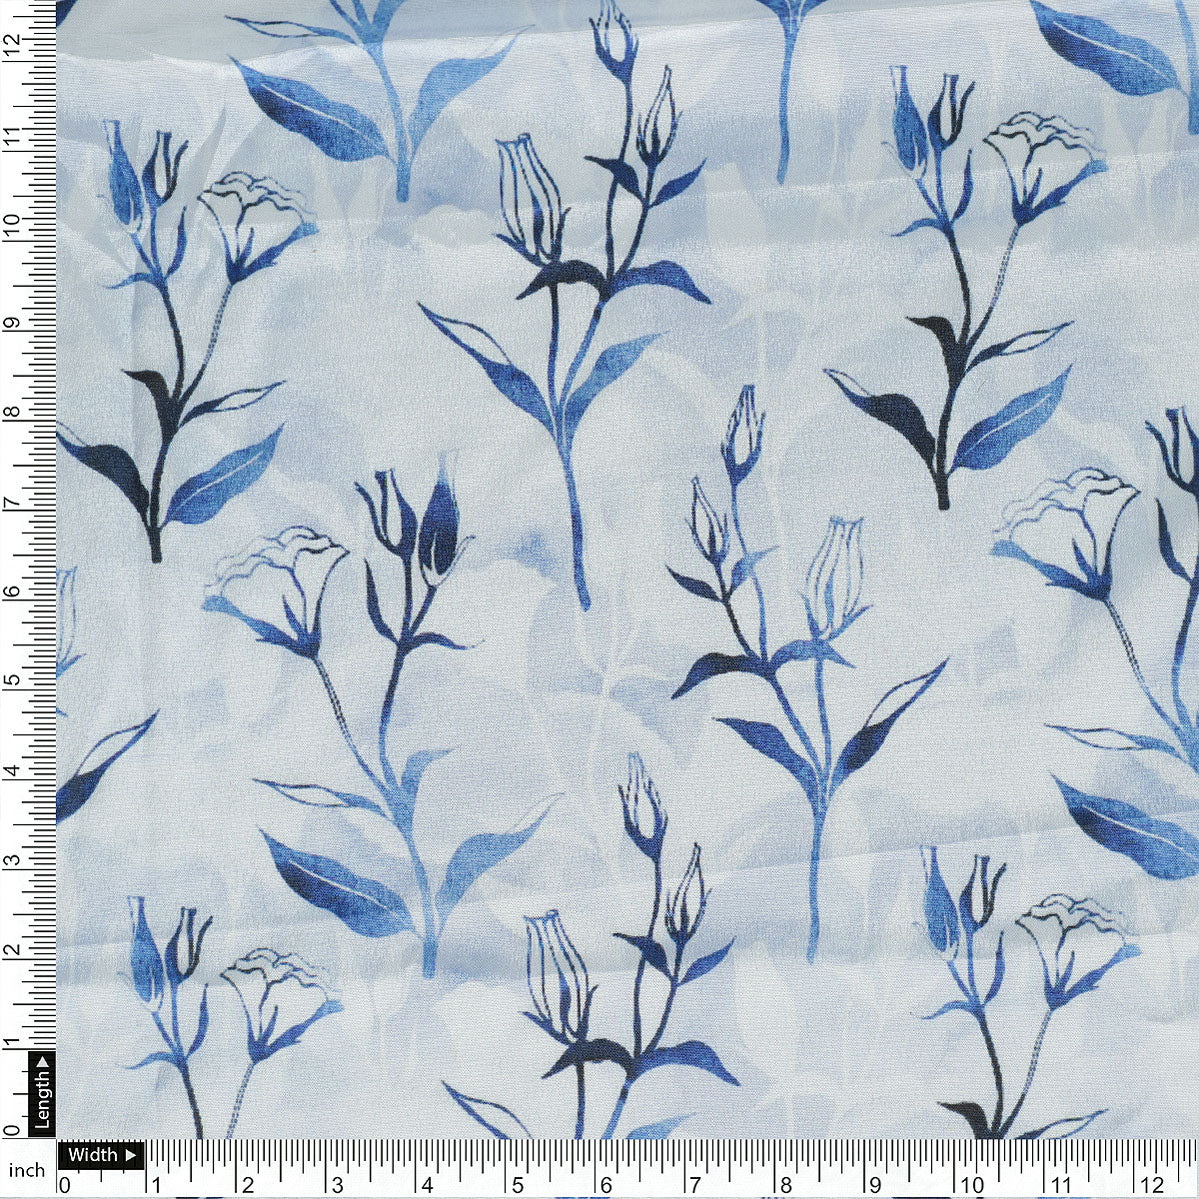 Attractive Blue Bud Water Paint Shadow Digital Printed Fabric - Silk Crepe